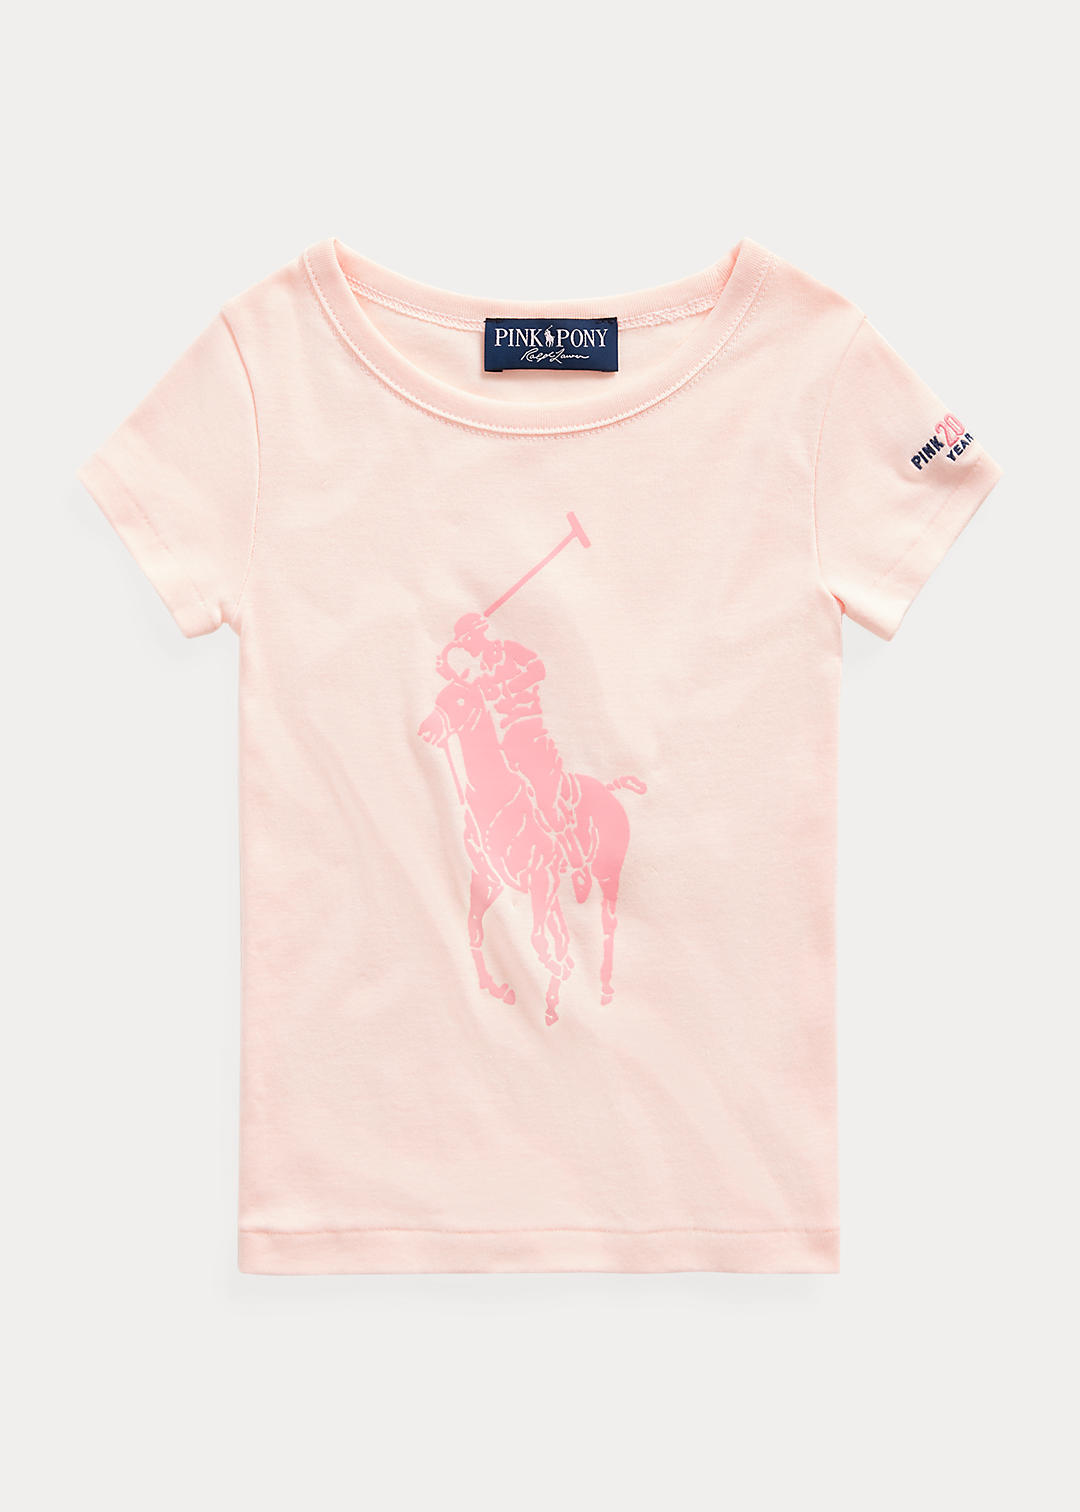 Pink Pony Graphic Tee